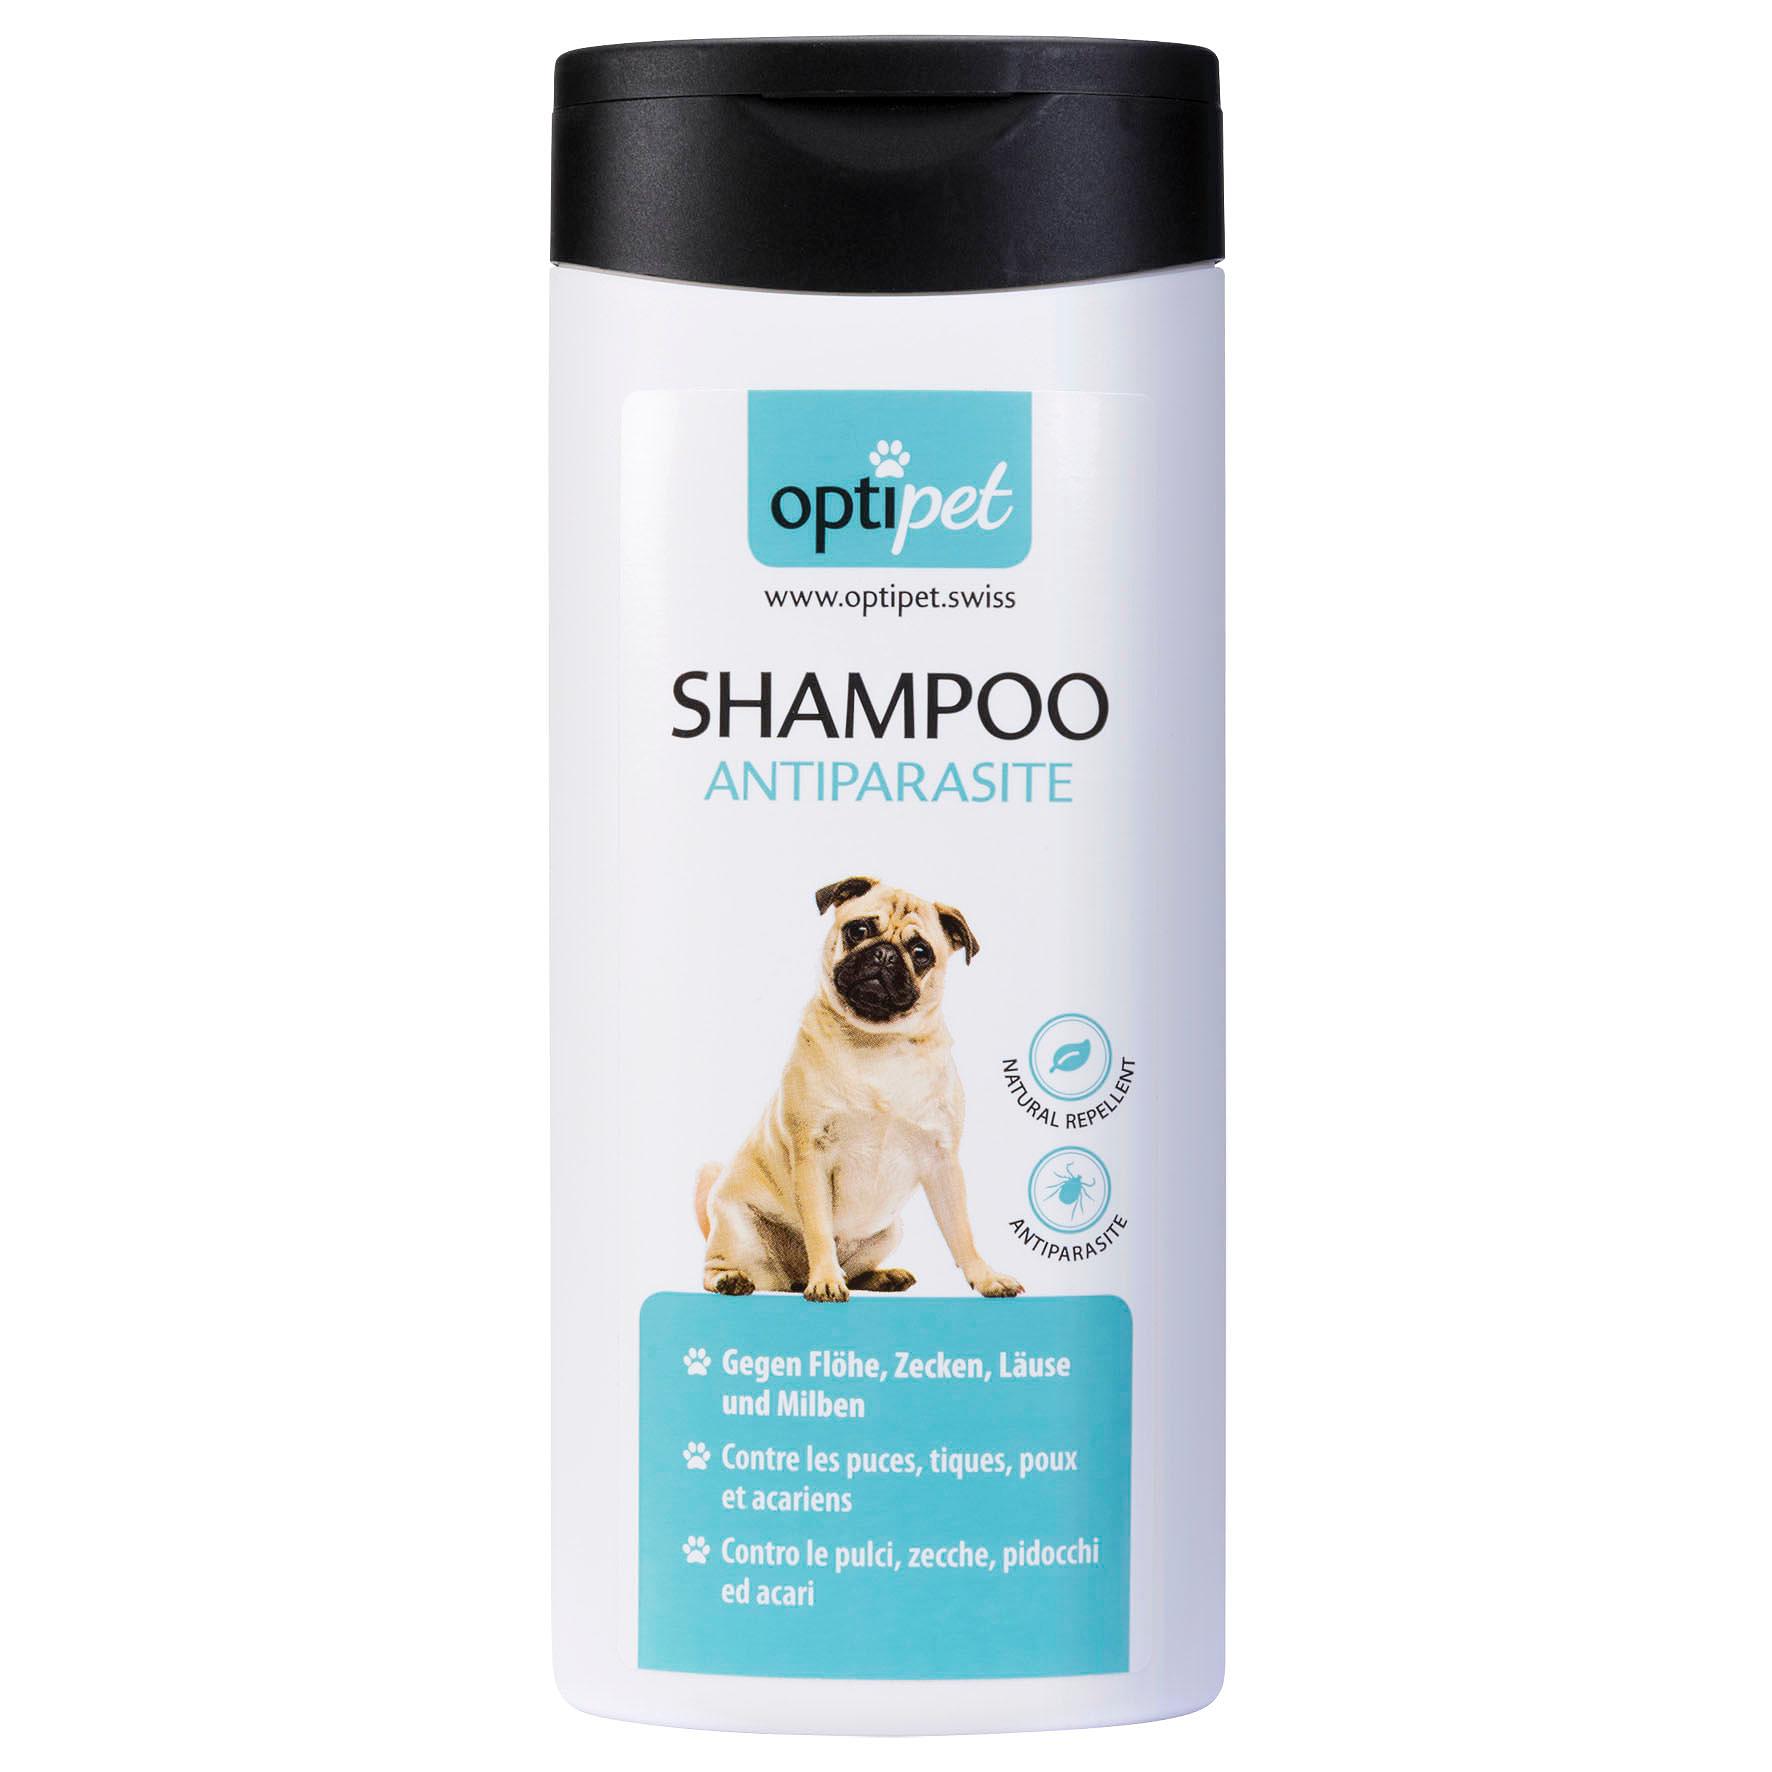 Optipet Shampoo Anitparasite